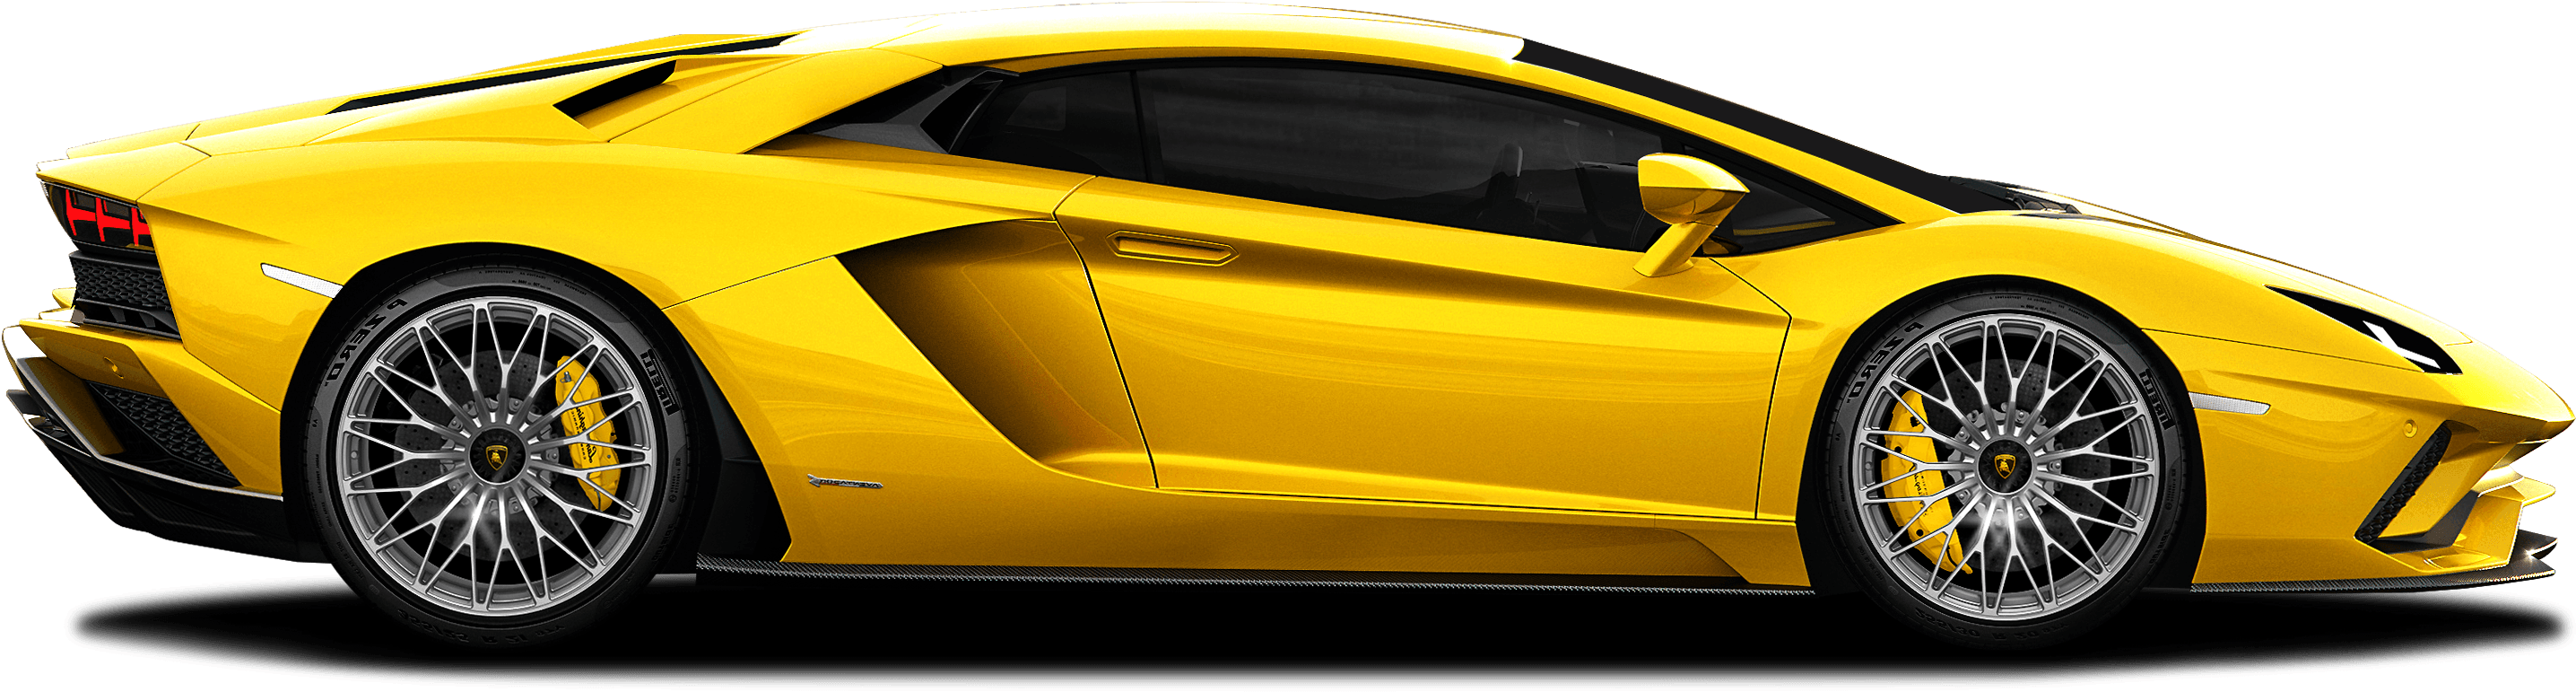 Yellow Lamborghini Side View PNG